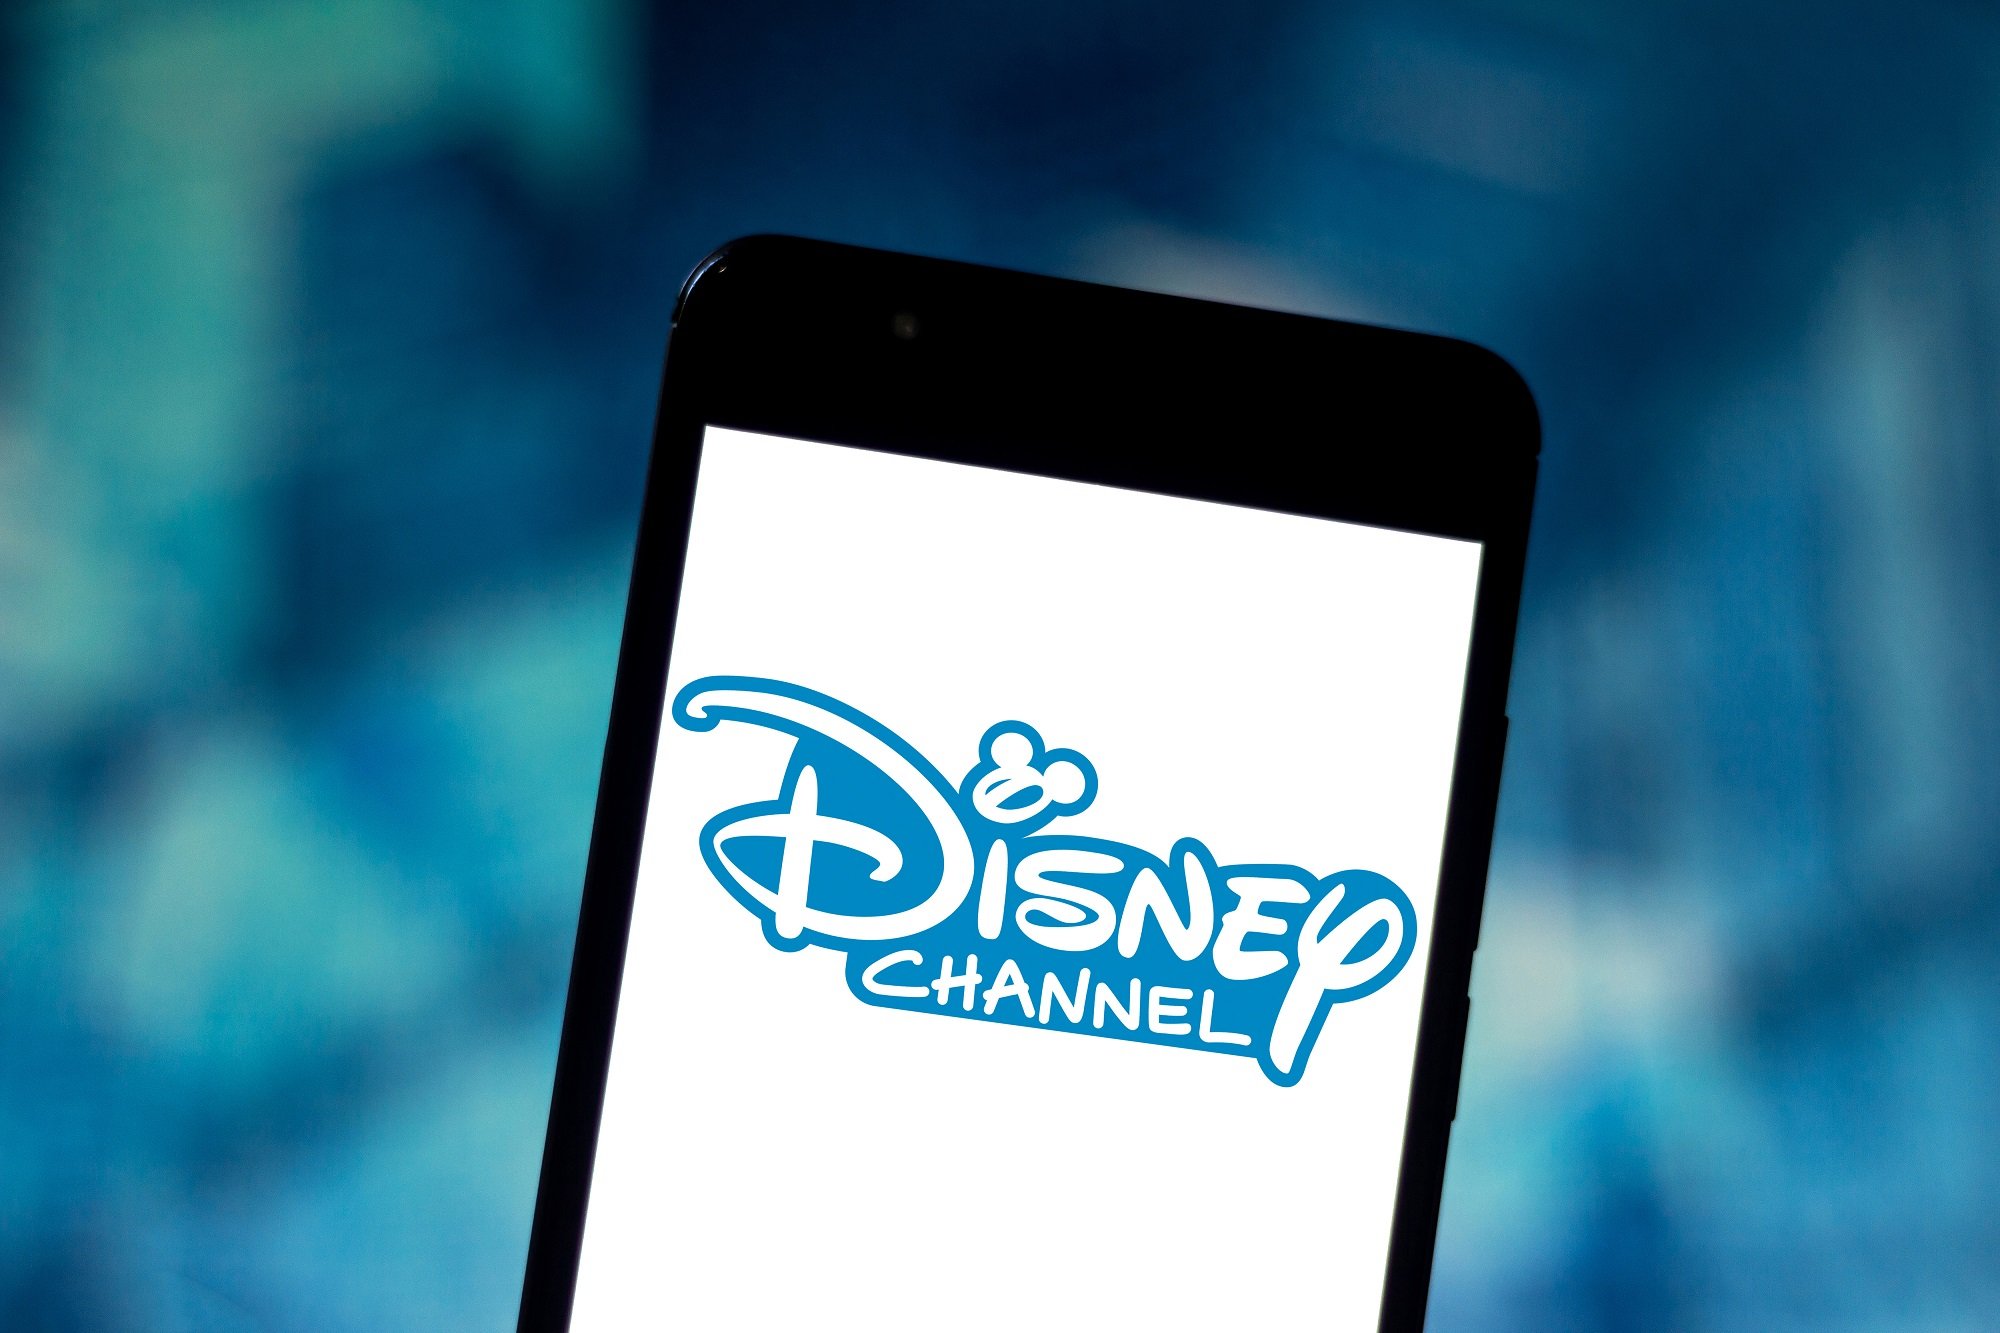 Disney Channel logo on a smartphone